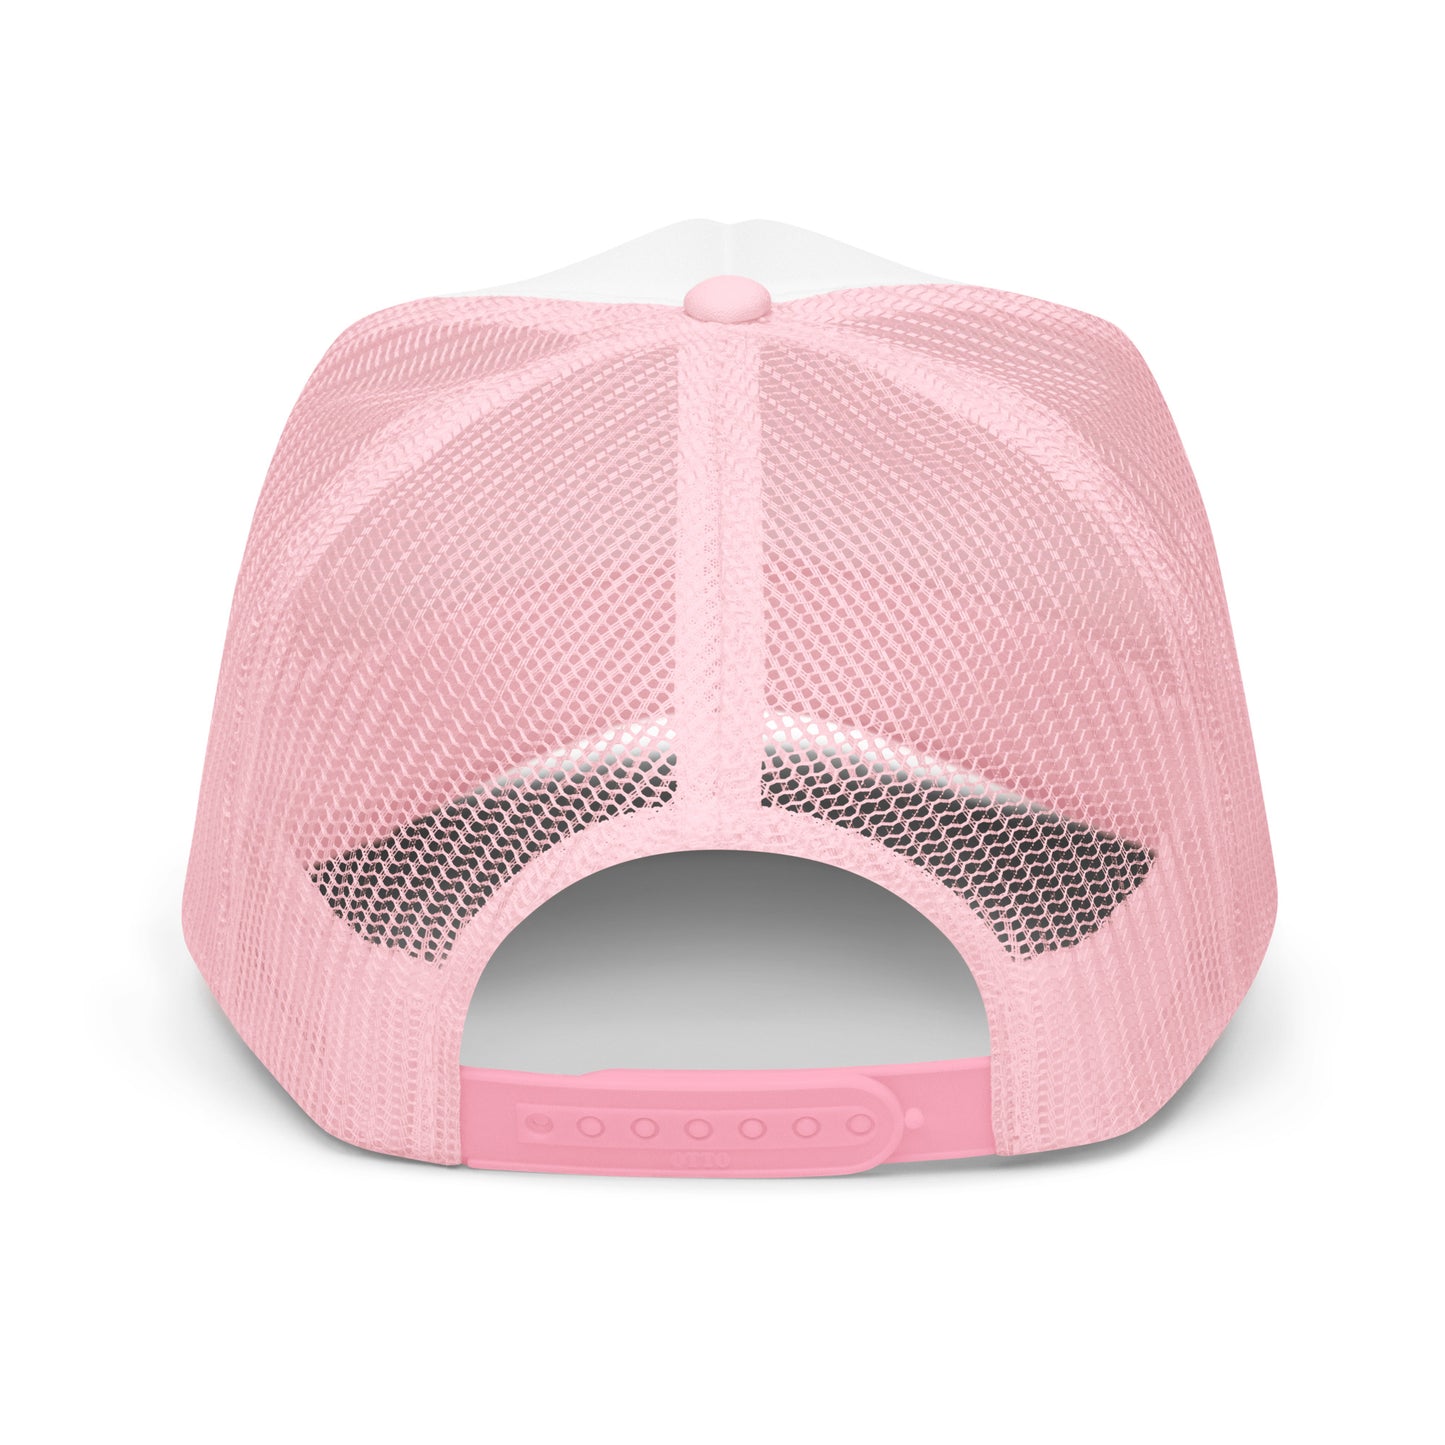 Feral Pink Embroidered Unisex Foam trucker hat